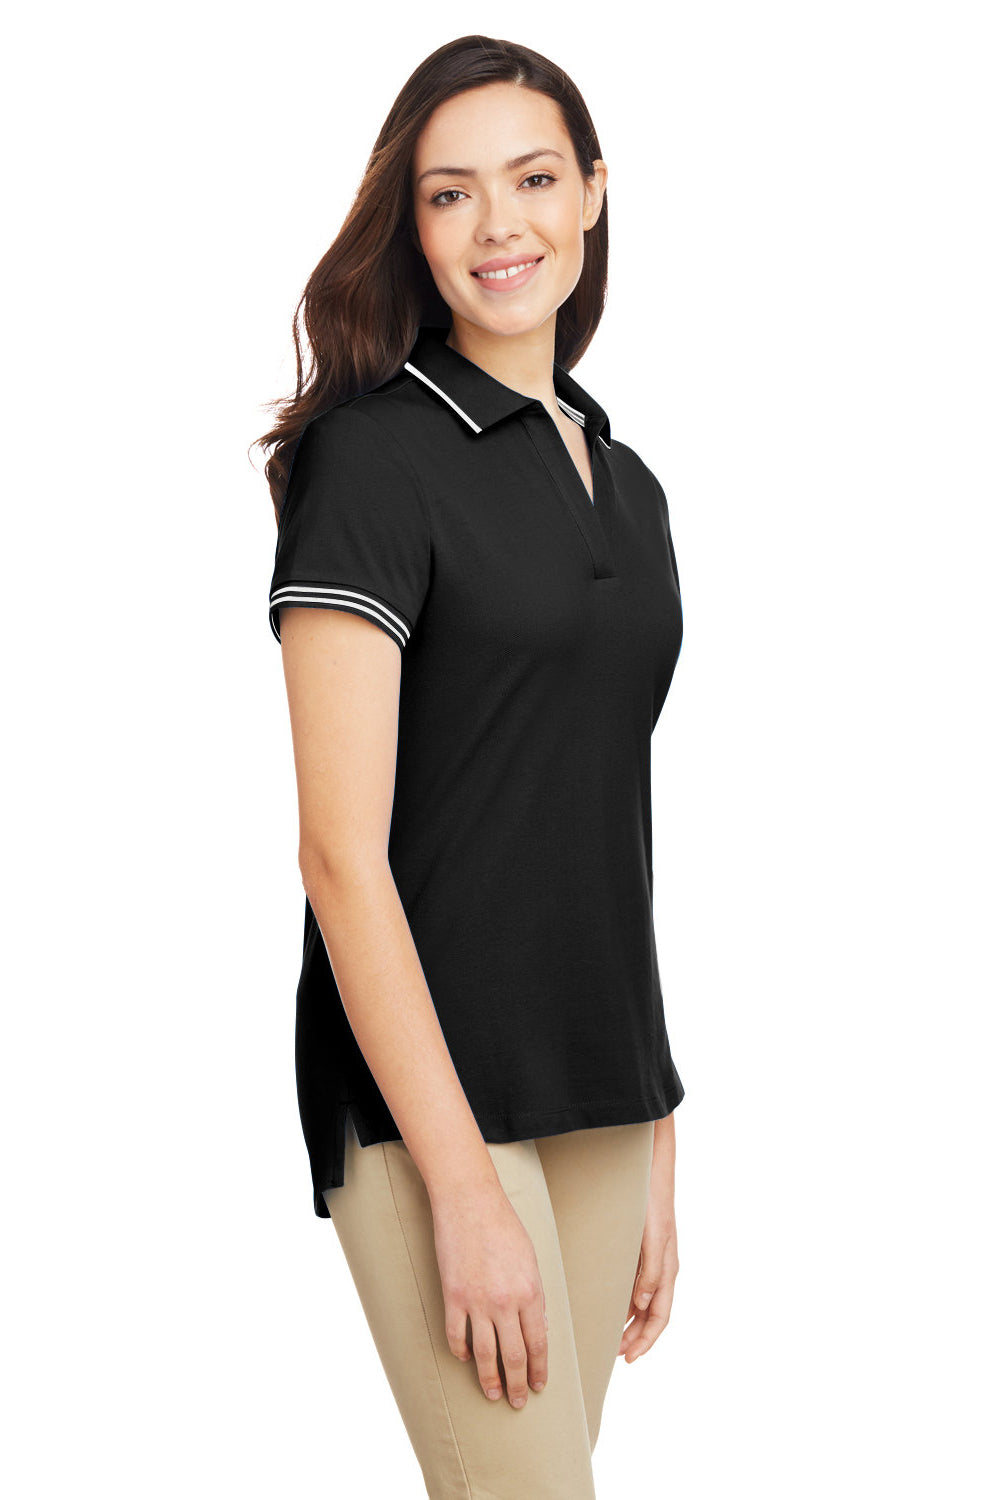 Nautica N17168 Womens Desk Short Sleeve Polo Shirt Black/White 3Q